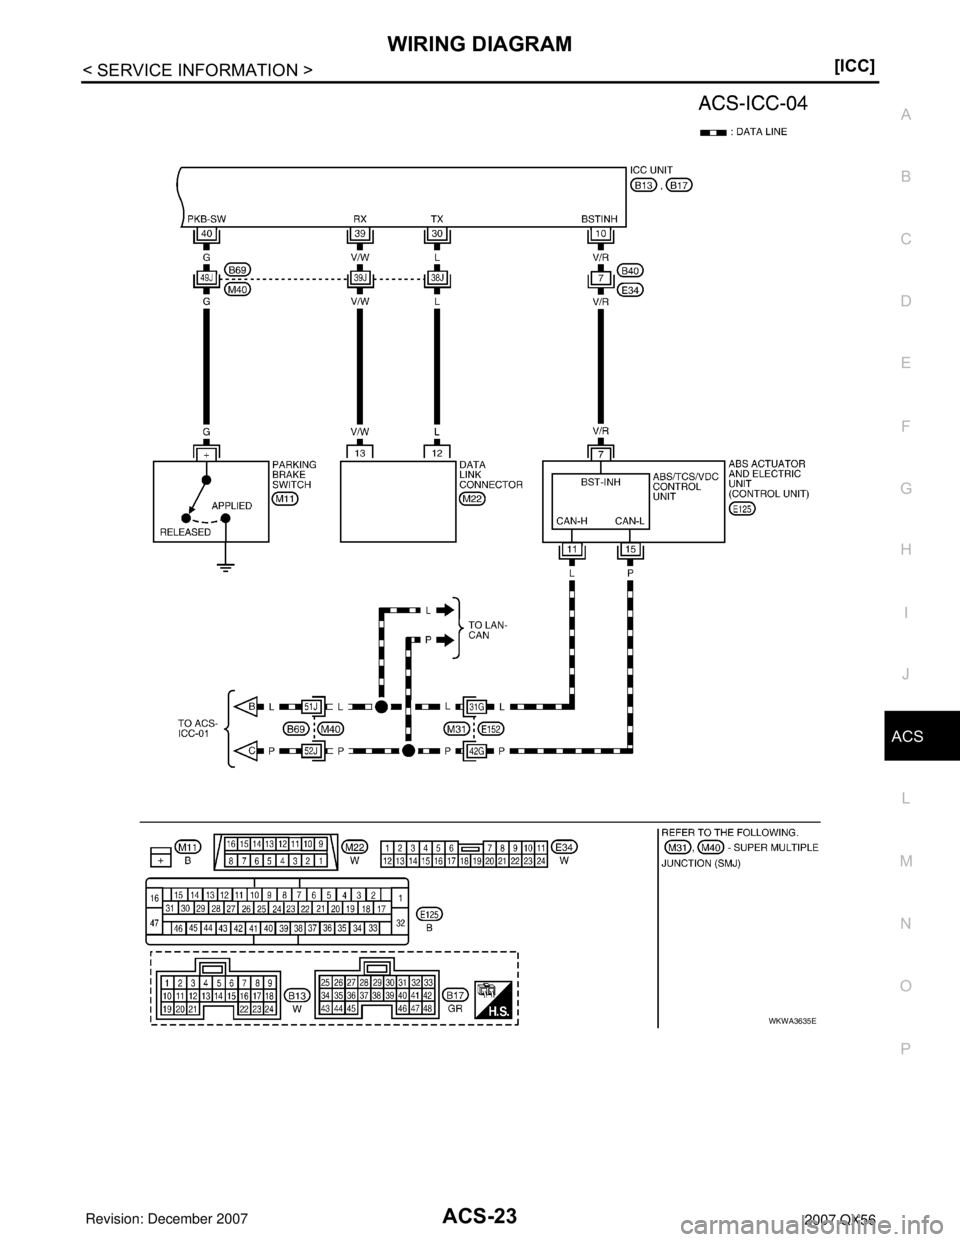 INFINITI QX56 2007  Factory Service Manual WIRING DIAGRAM
ACS-23
< SERVICE INFORMATION >[ICC]
C
D
E
F
G
H
I
J
L
MA
B
ACS
N
O
P
WKWA3635E 